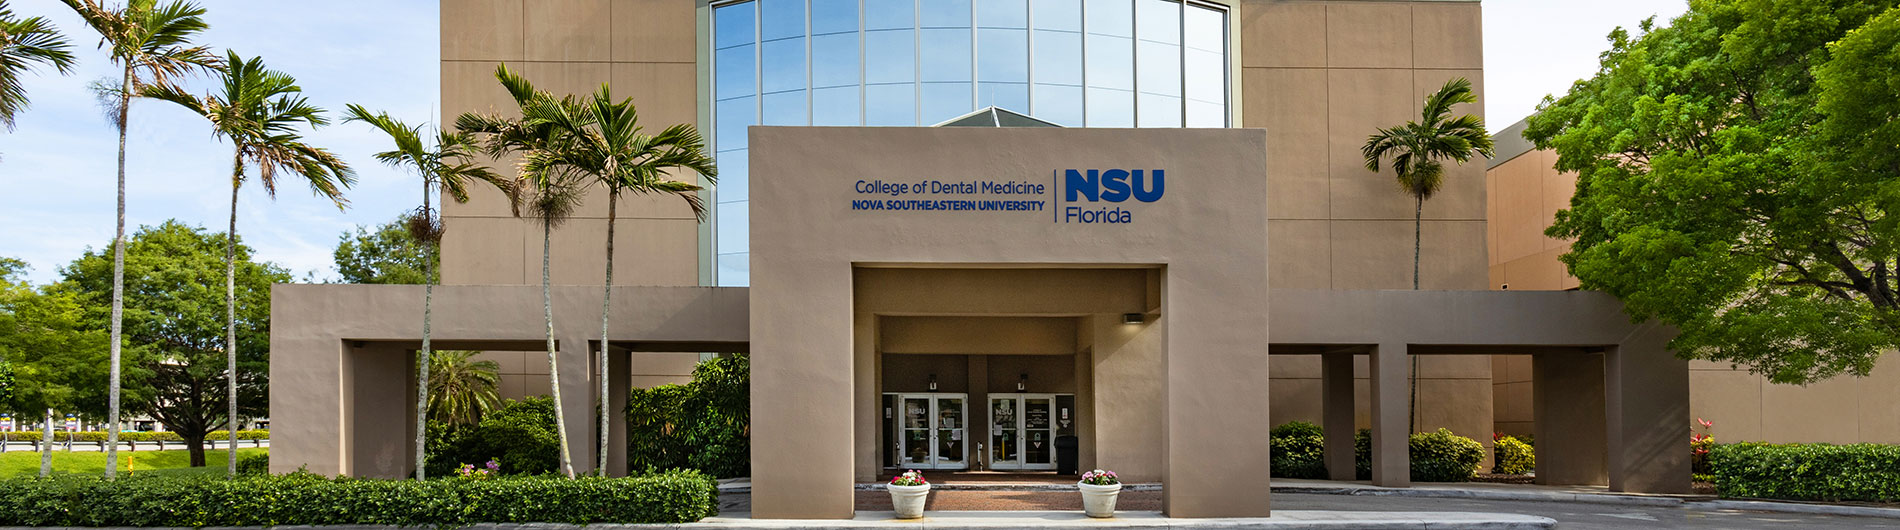 NSU Florida College of Dental Medicine Building